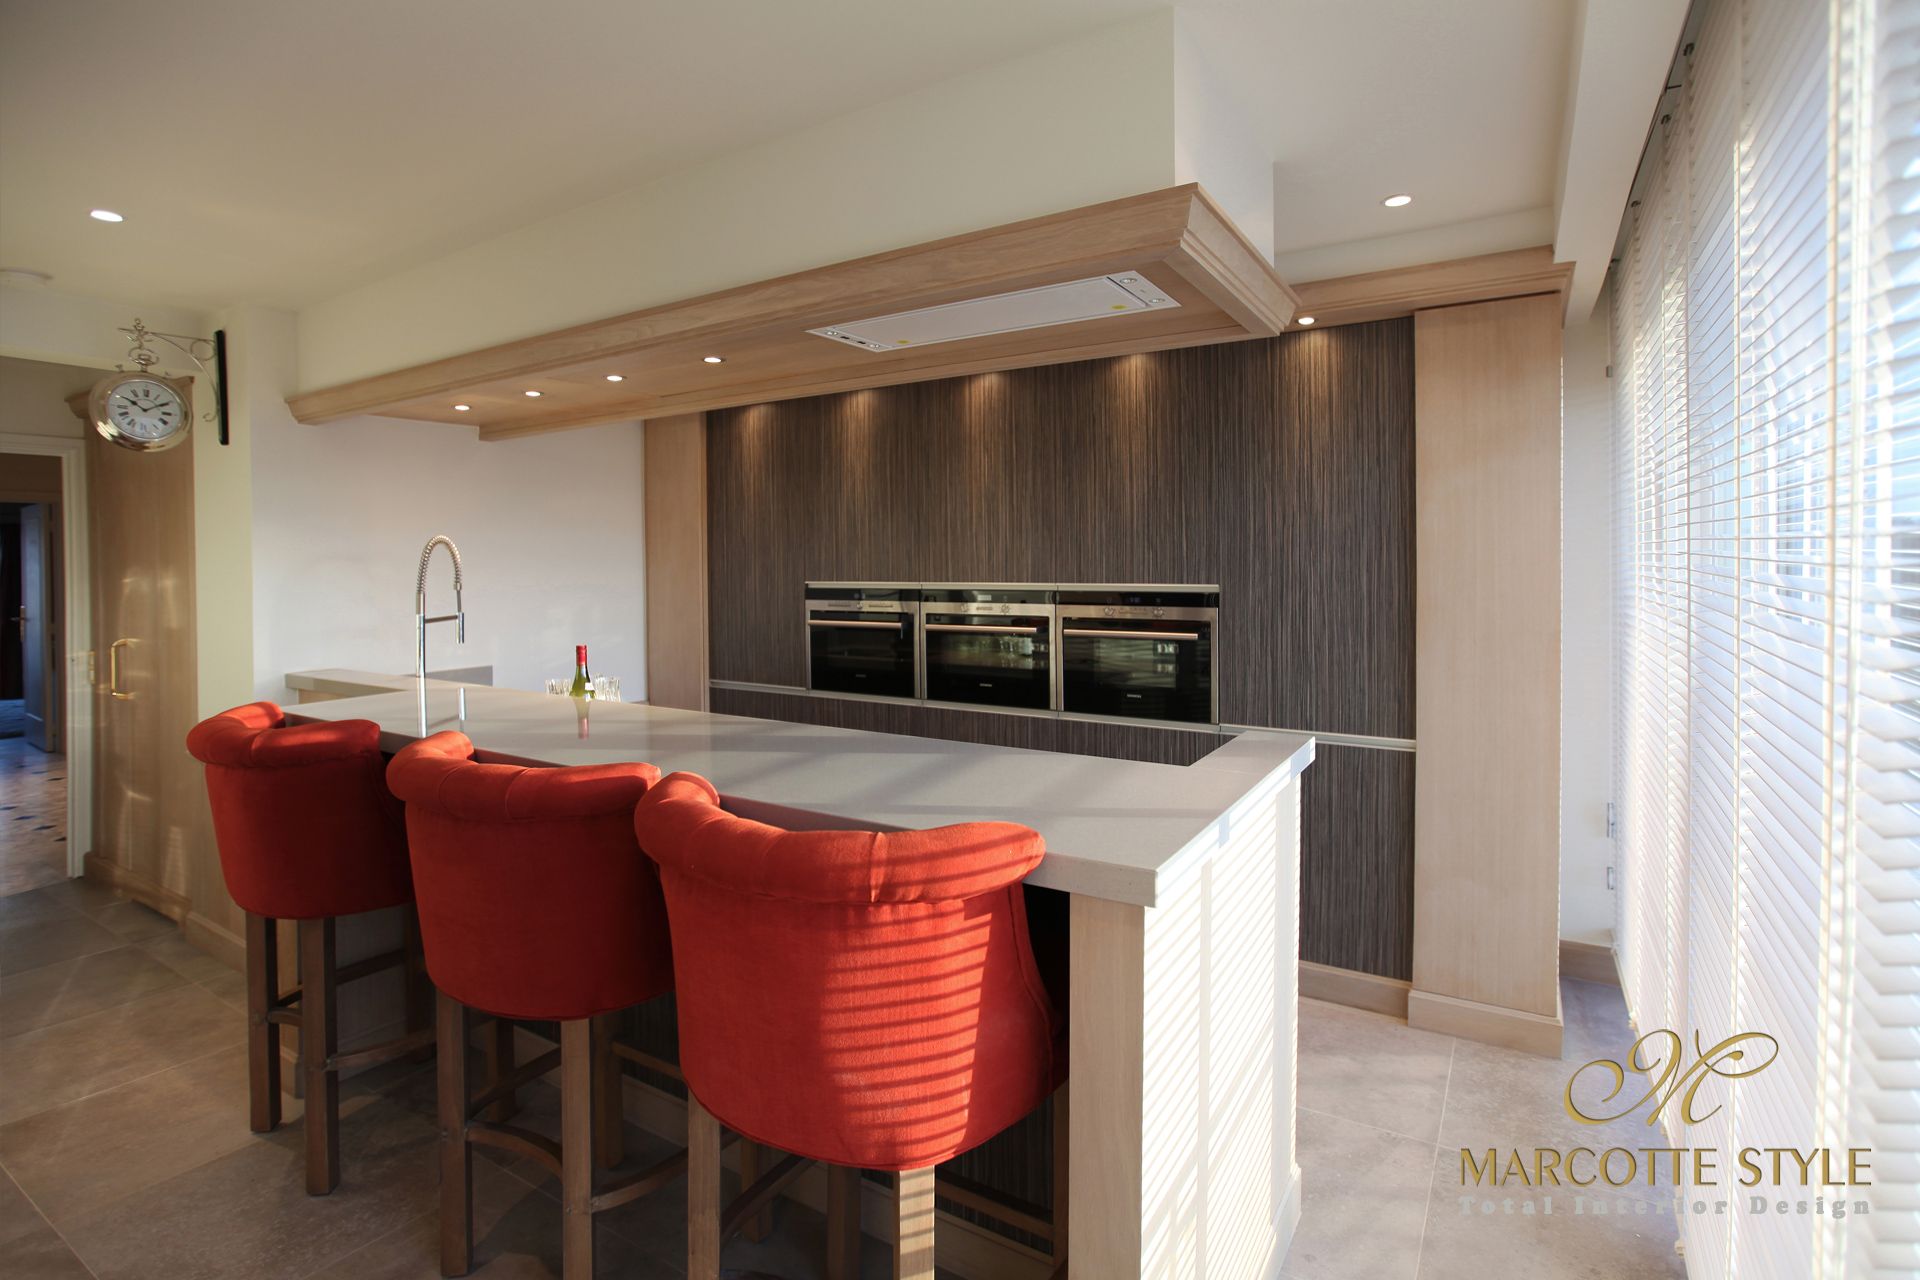 Kitchen - Marcotte Style